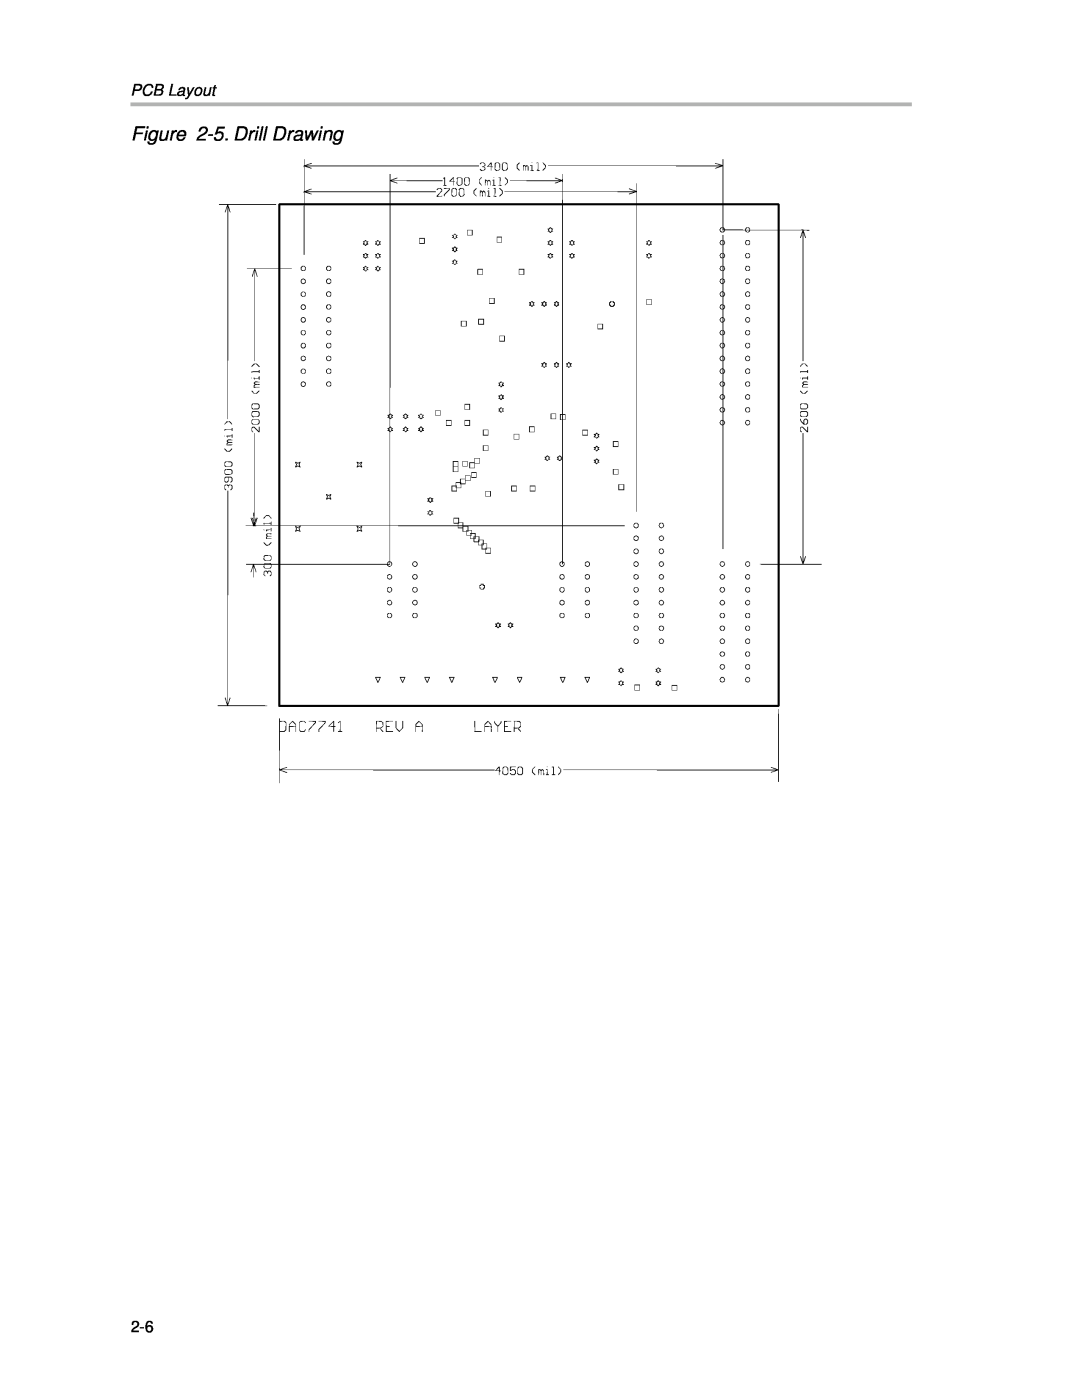 Texas Instruments DAC7741EVM manual 5. Drill Drawing, PCB Layout 